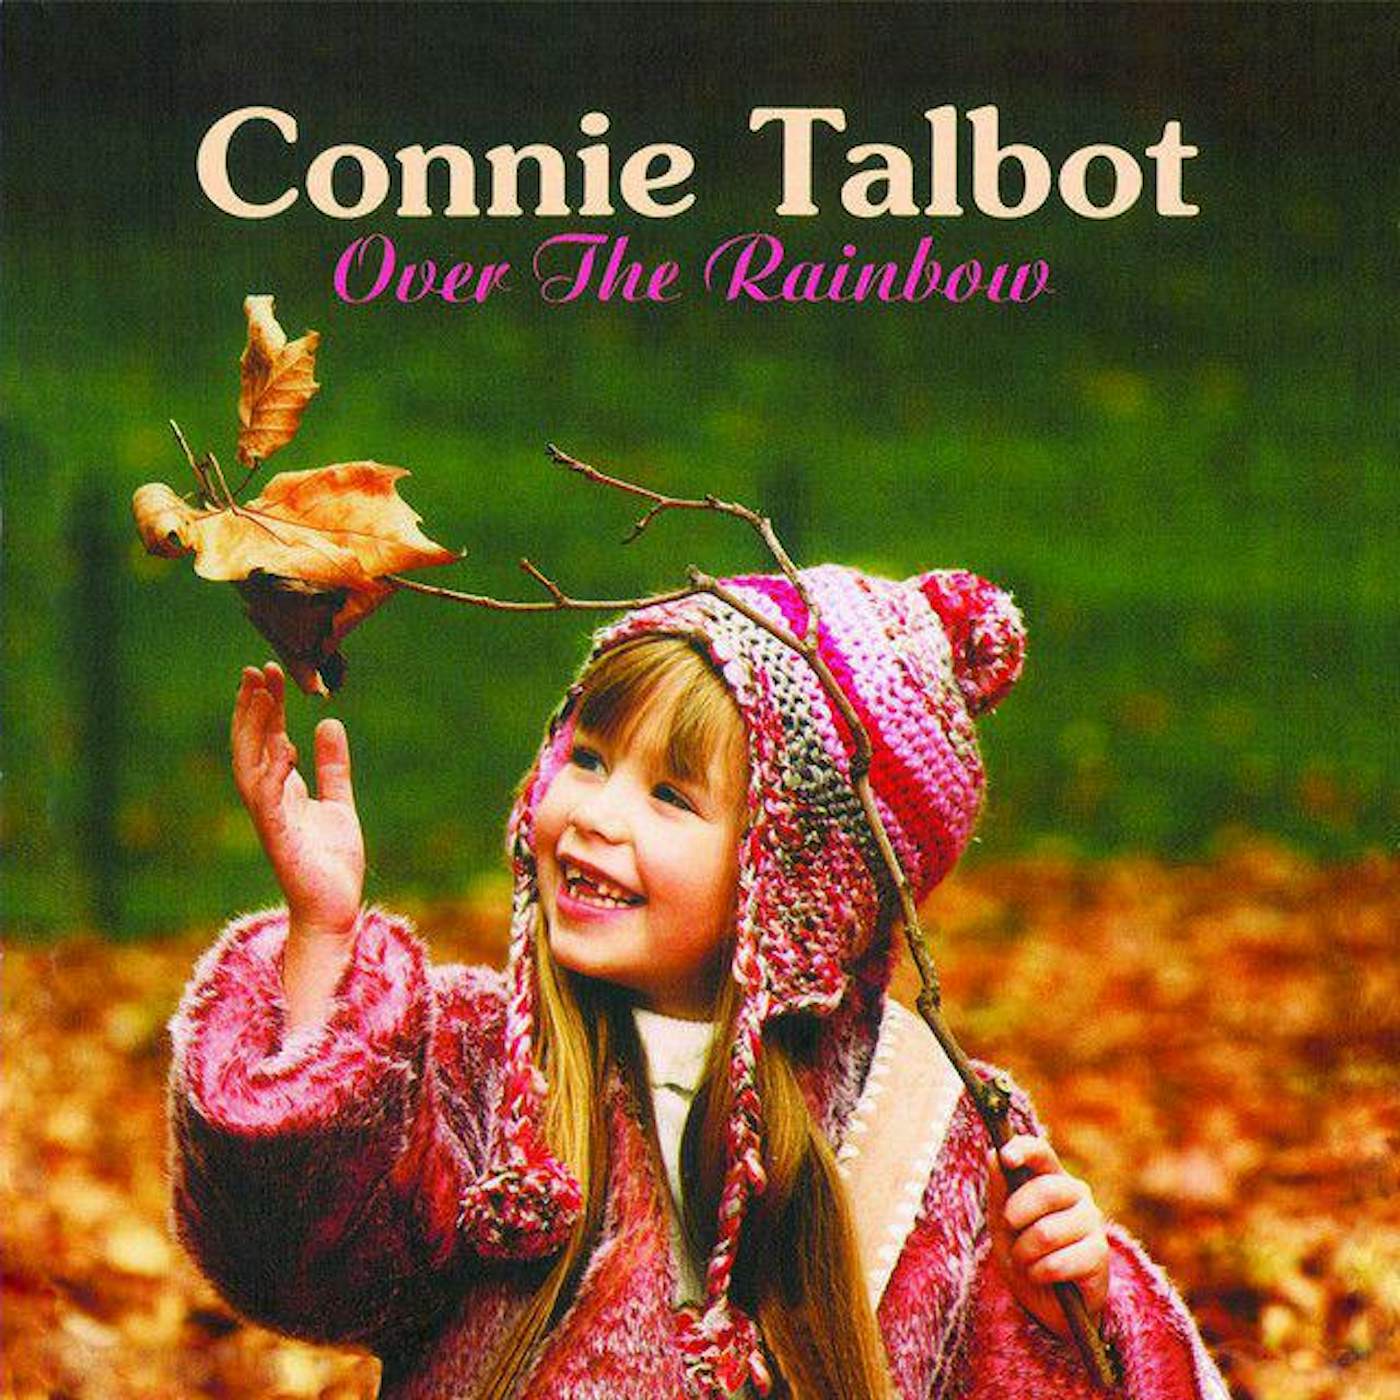 Connie Talbot Shirts, Connie Talbot Merch, Connie Talbot Hoodies